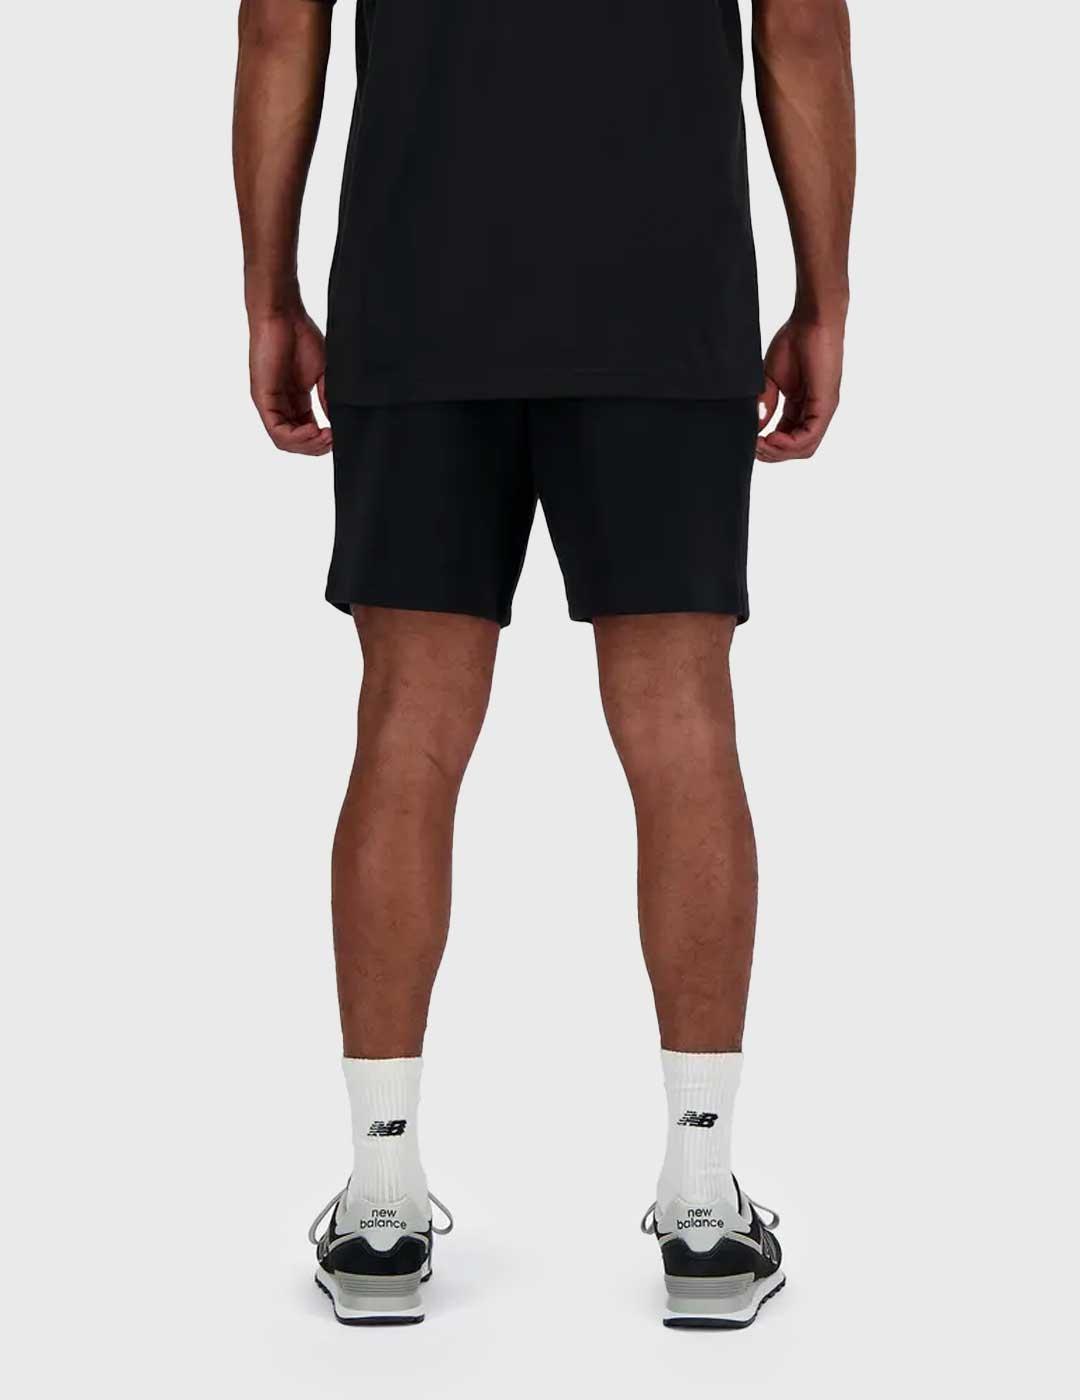 New Balance HD Short 7 Inch Pantalón corto negro para hombre